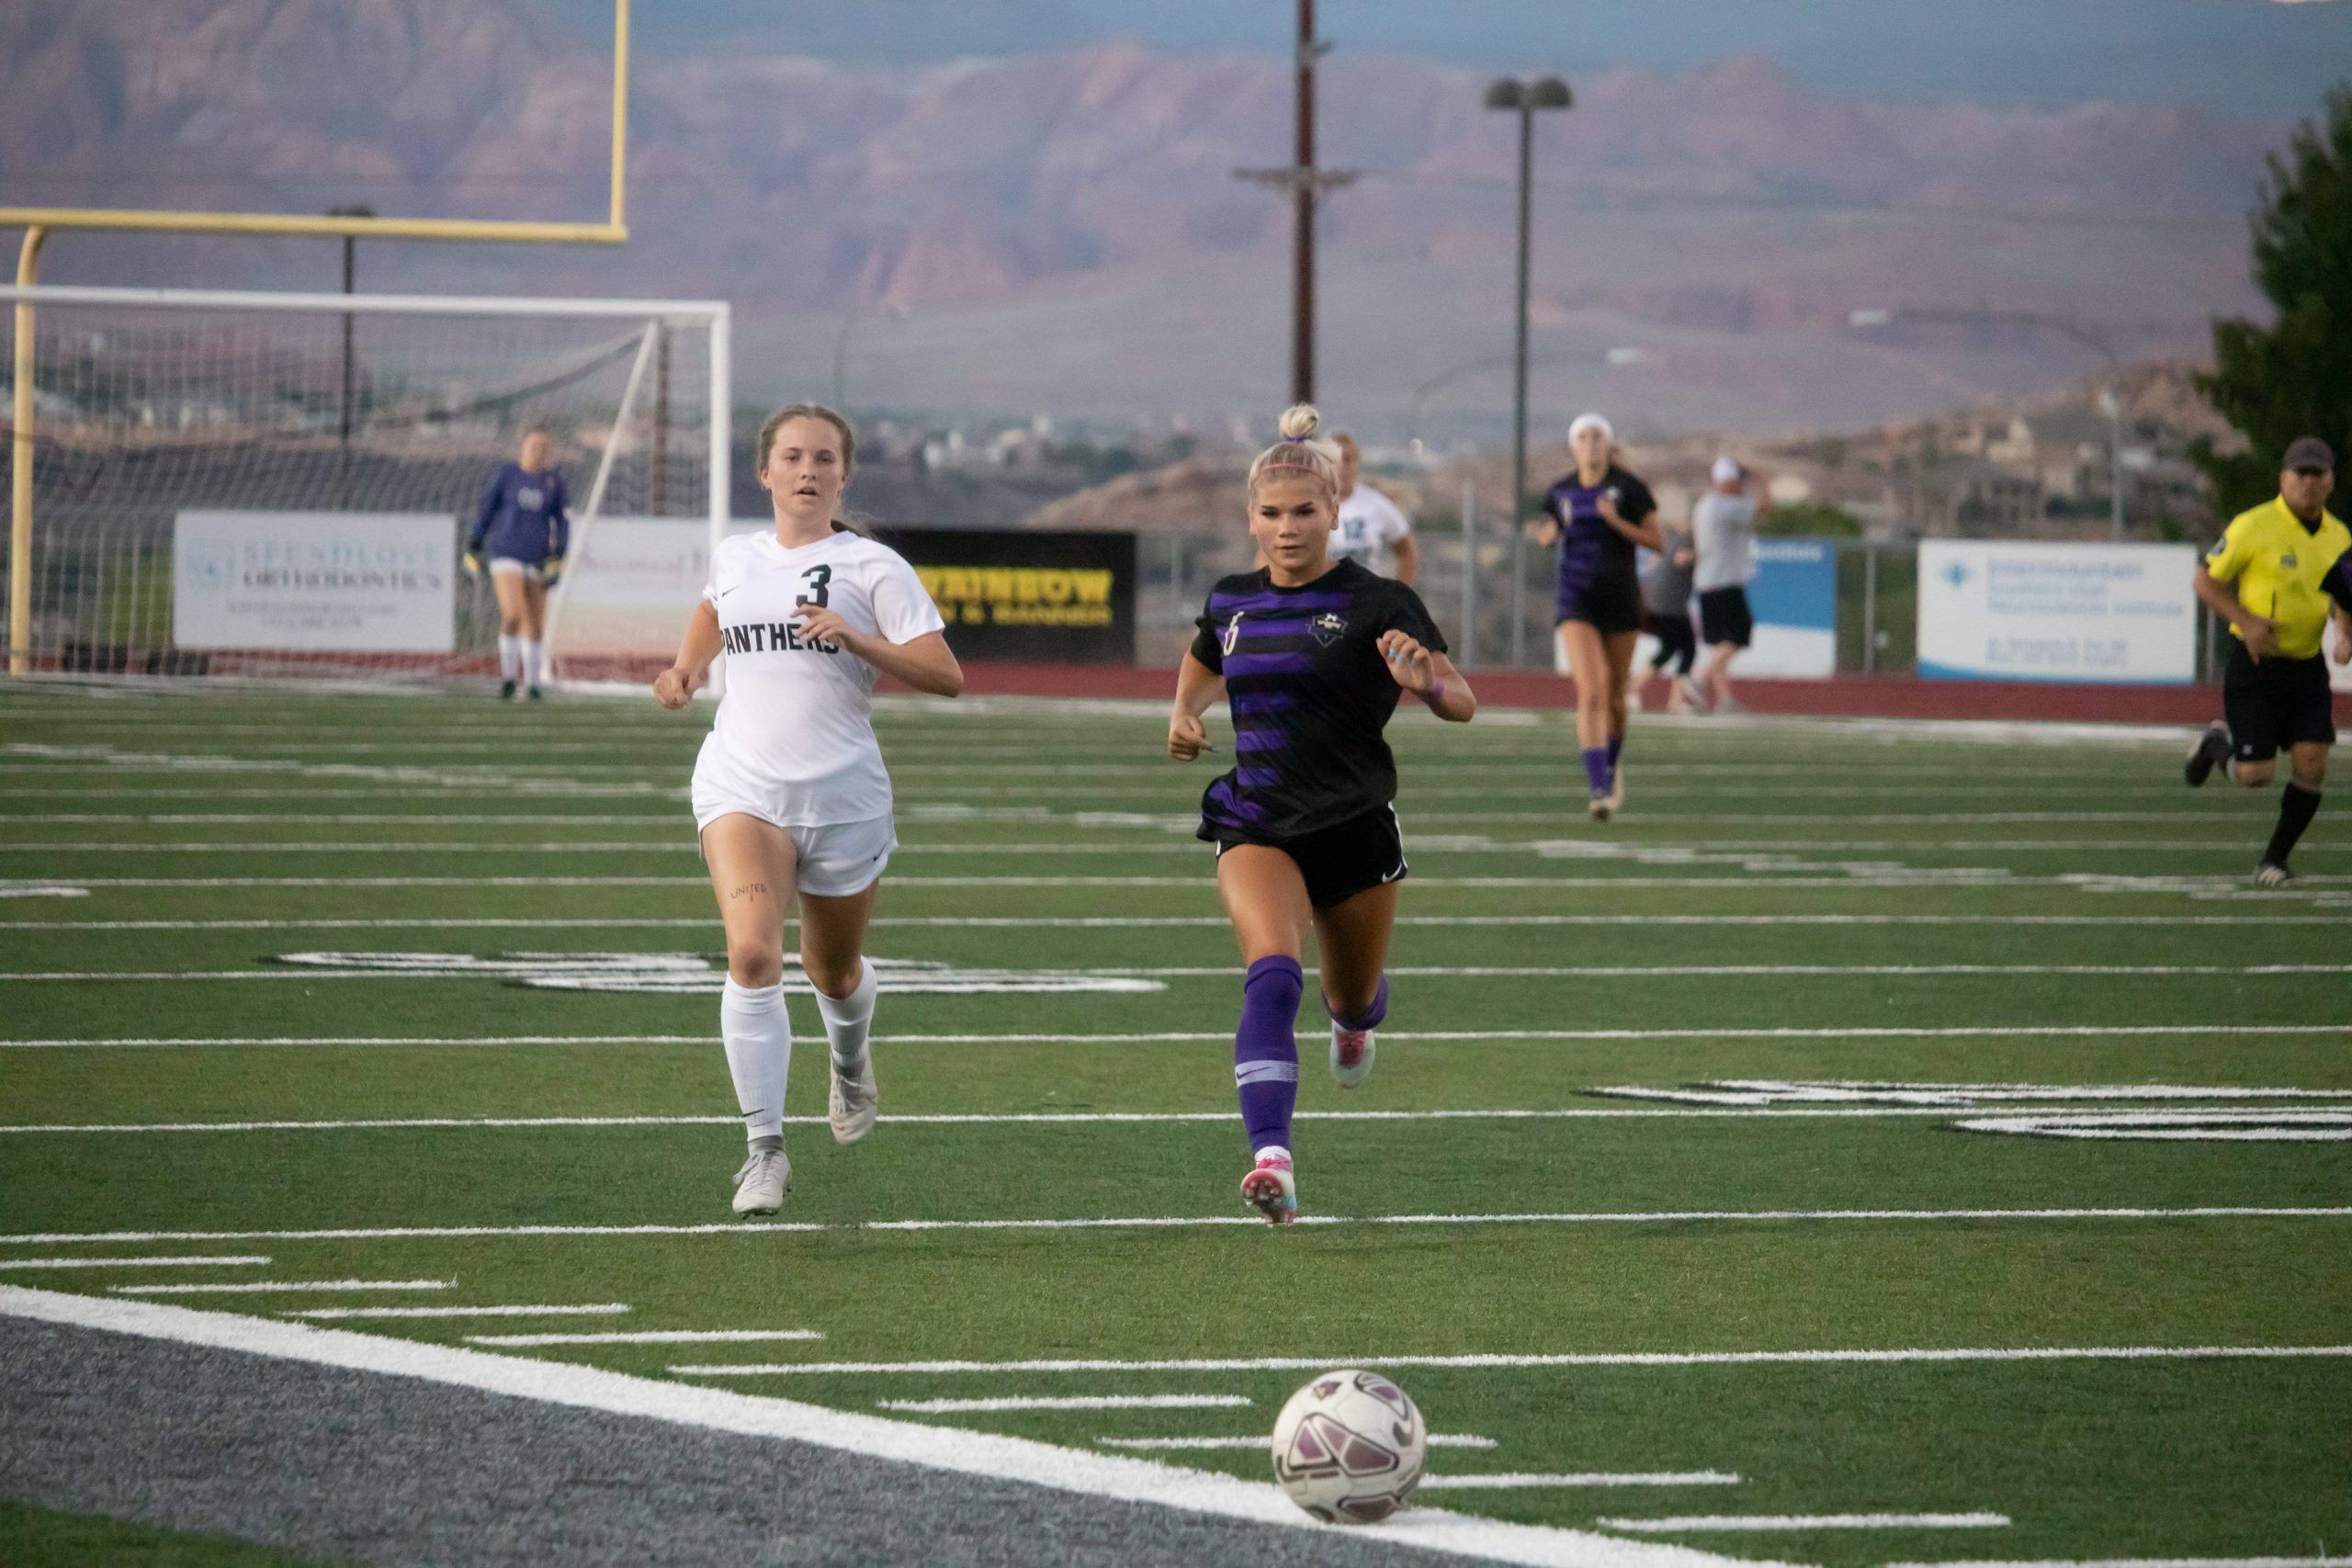 girls soccer players chasing ball